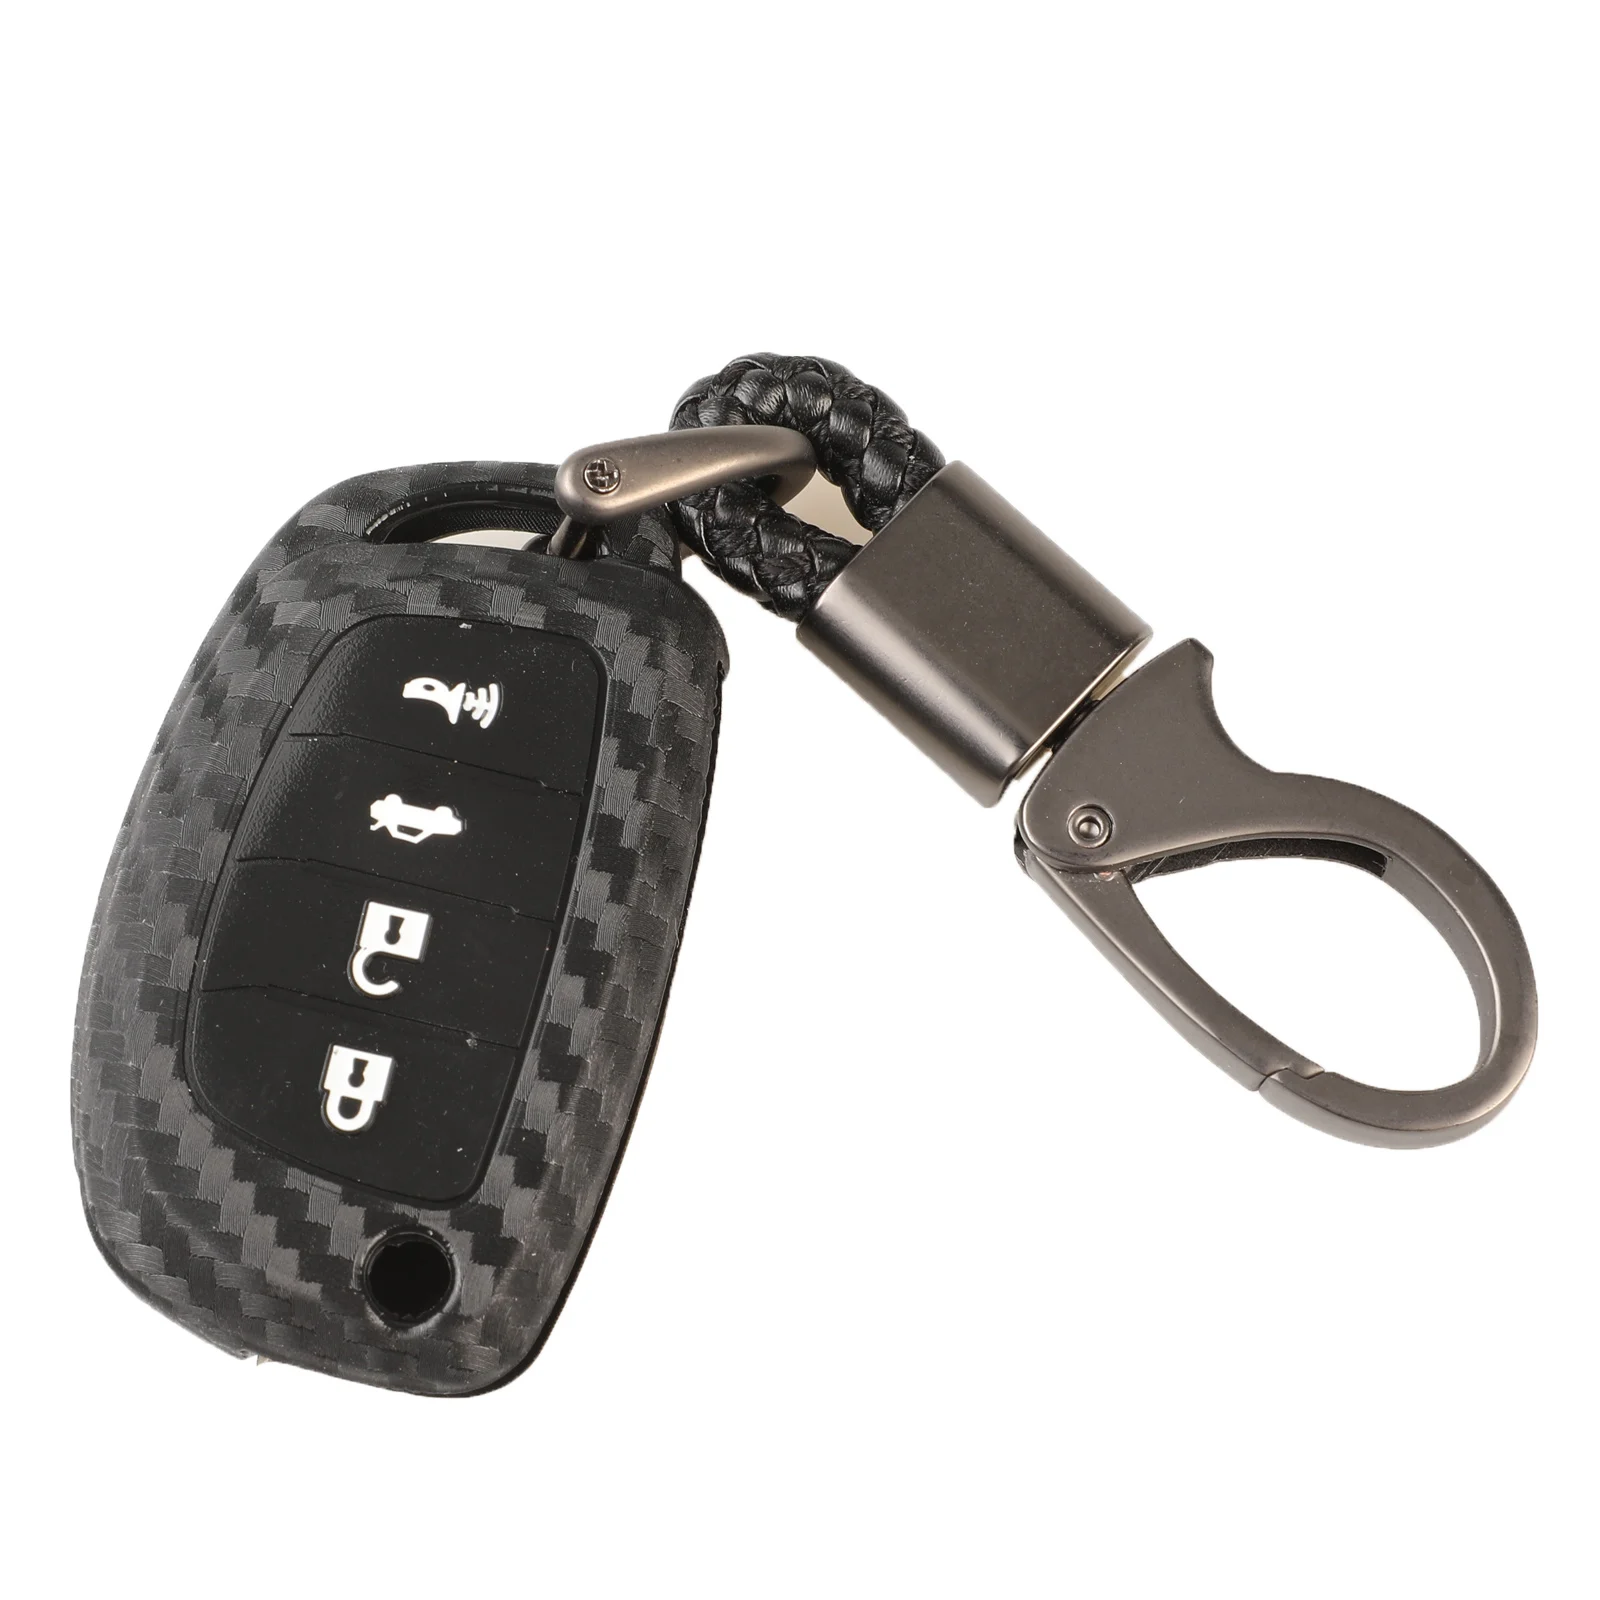 Jingyuqin волоконный чехол для ключей автомобиля для hyundai Creta Tucson Santa fe Elantra Sonata i20 i30 i40 i25 ix35 флип-пульт дистанционного управления Fob углеродный чехол - Название цвета: 4B with Braid Ring